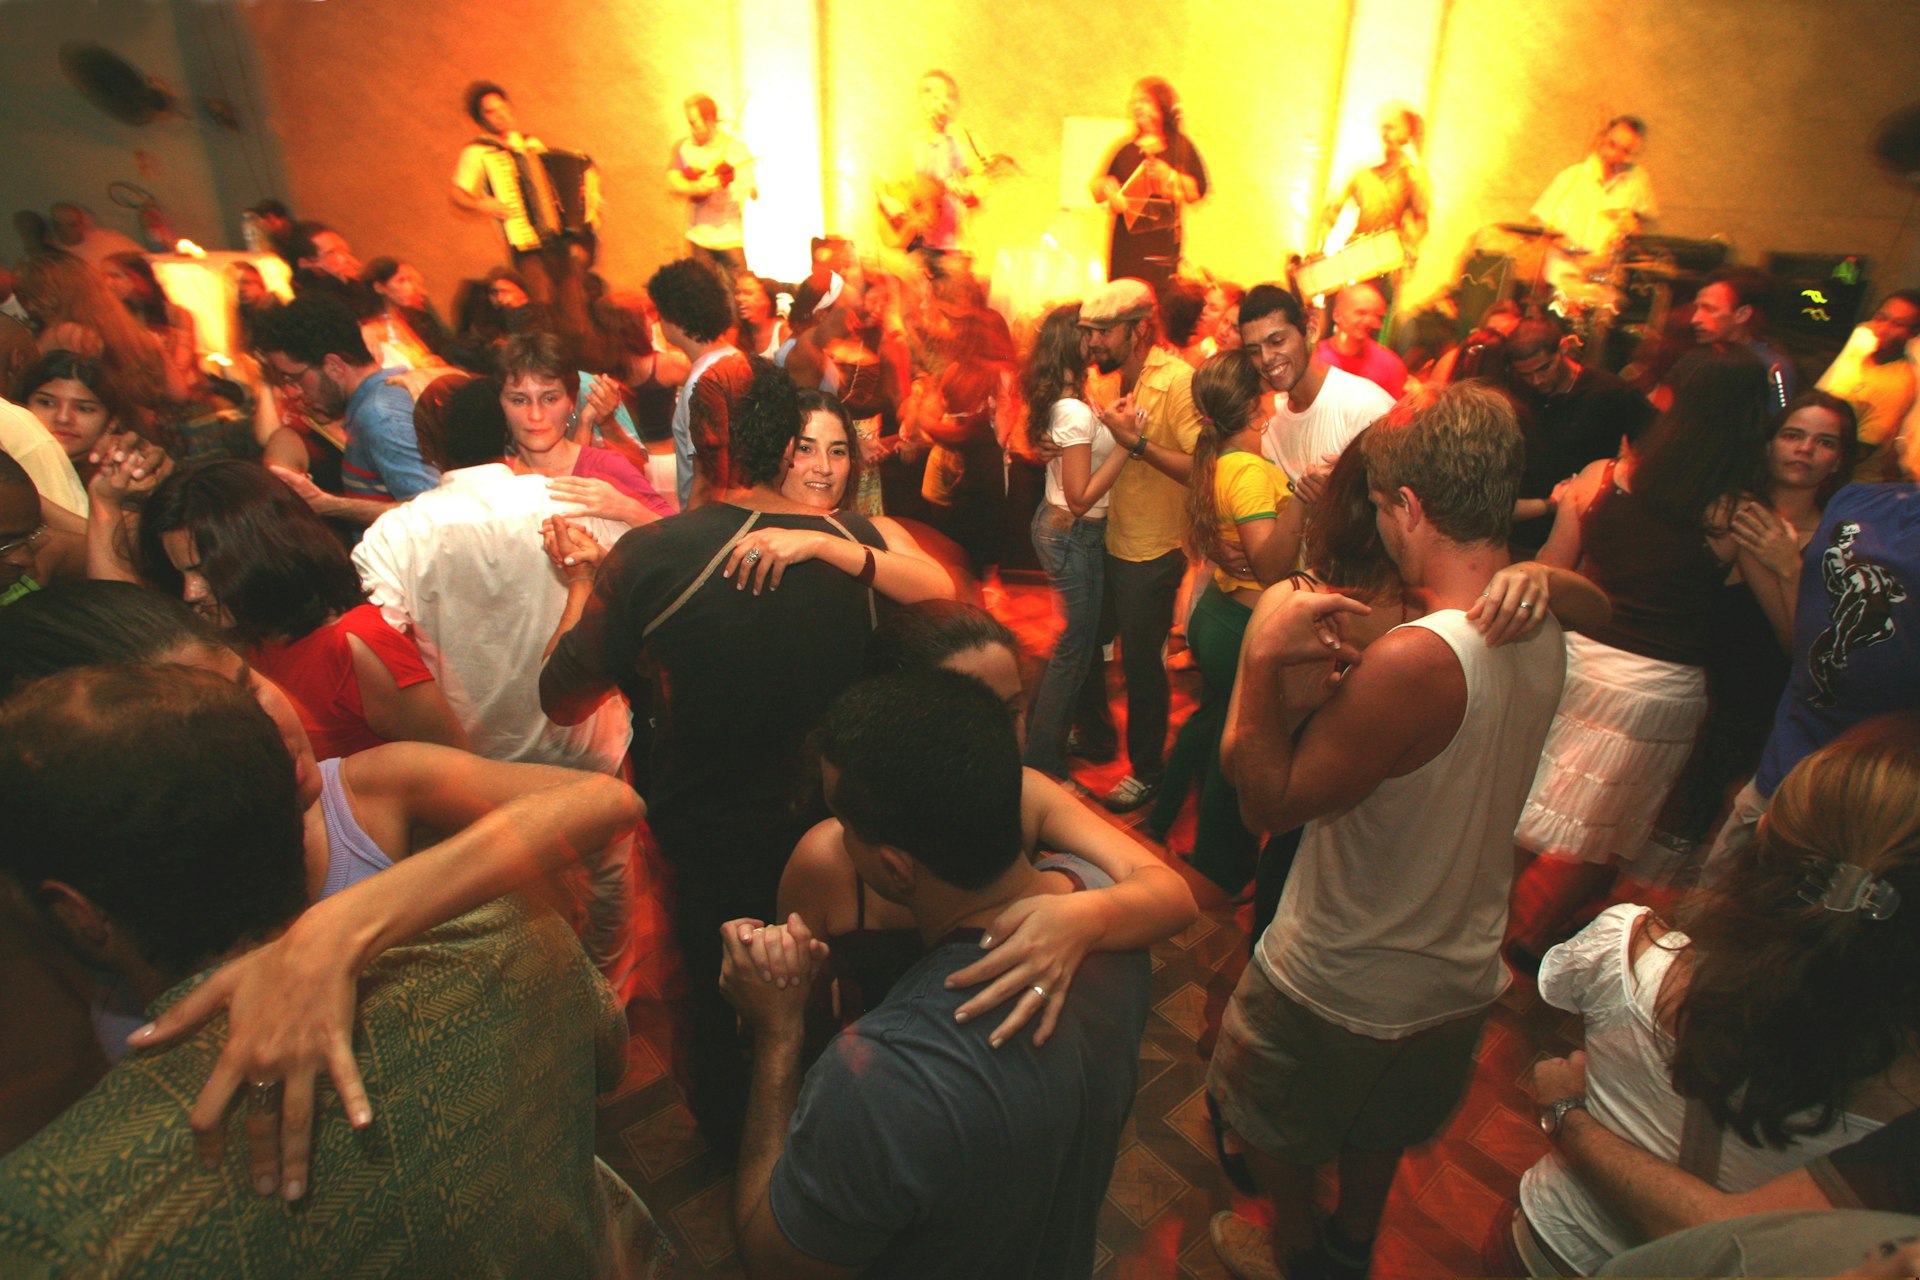 Samba music and dancing in Clube dos Democraticos, Rio de Janeiro, Brazil